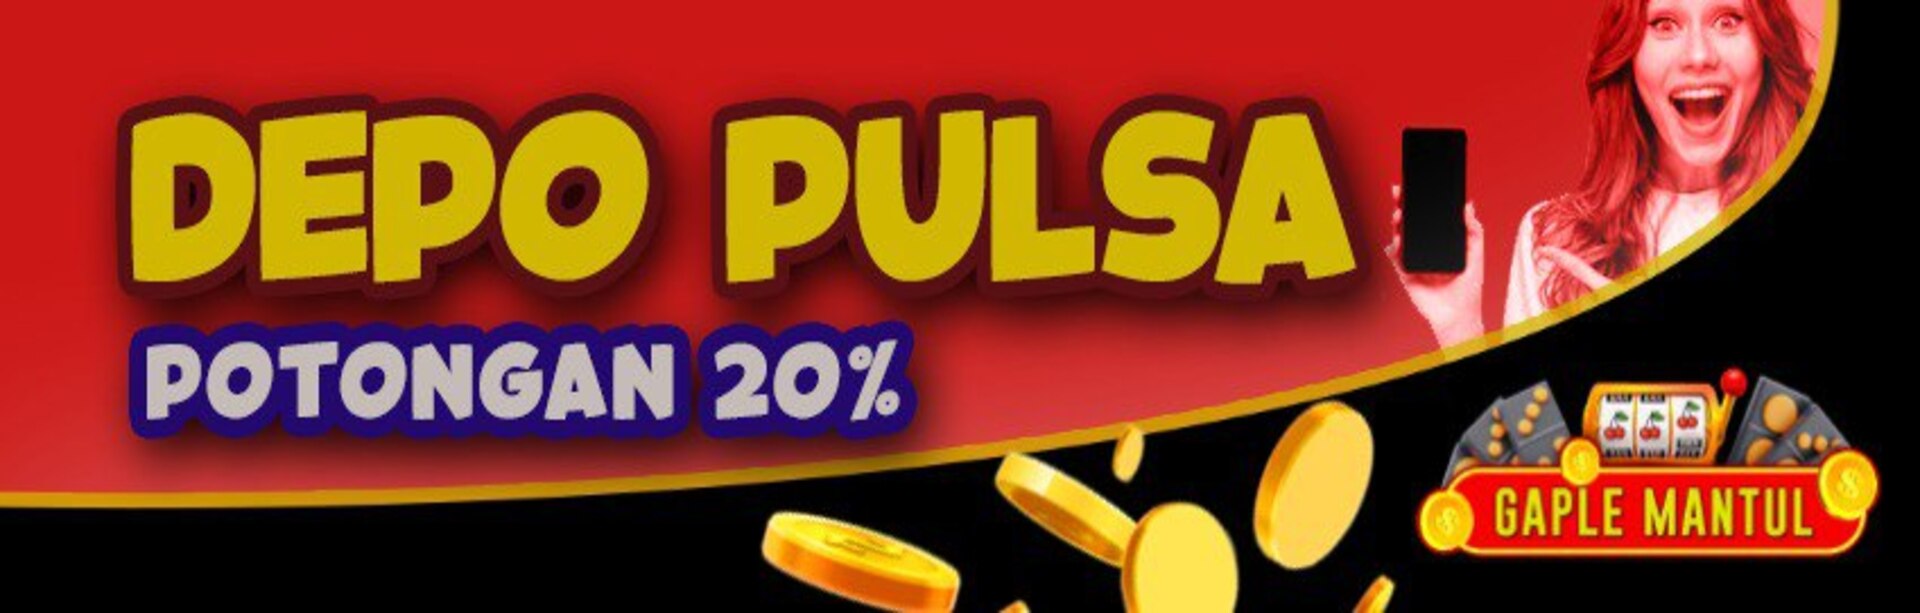 Deposit Pulsa Potongan 20%